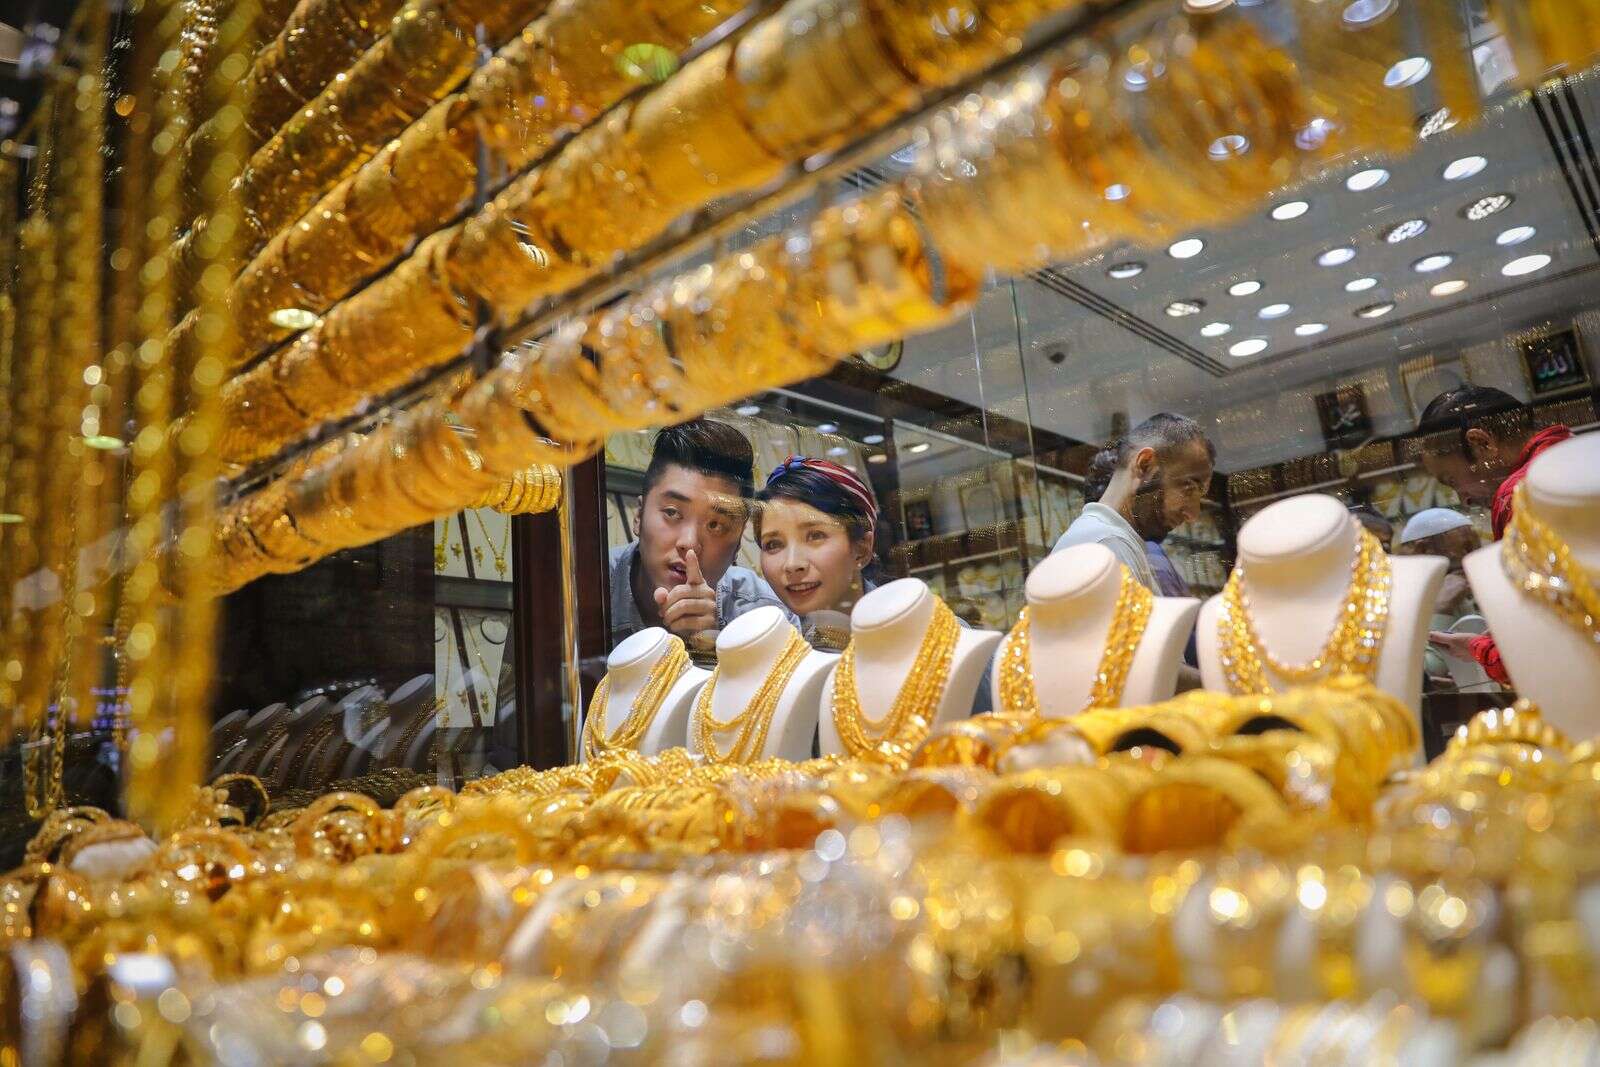 Дубай golden. Рынок золота Gold Souk. Голд СОУК Дубай. ОАЭ, Gold Souk, Deira,Dubai. Golden Souk в Дубае.